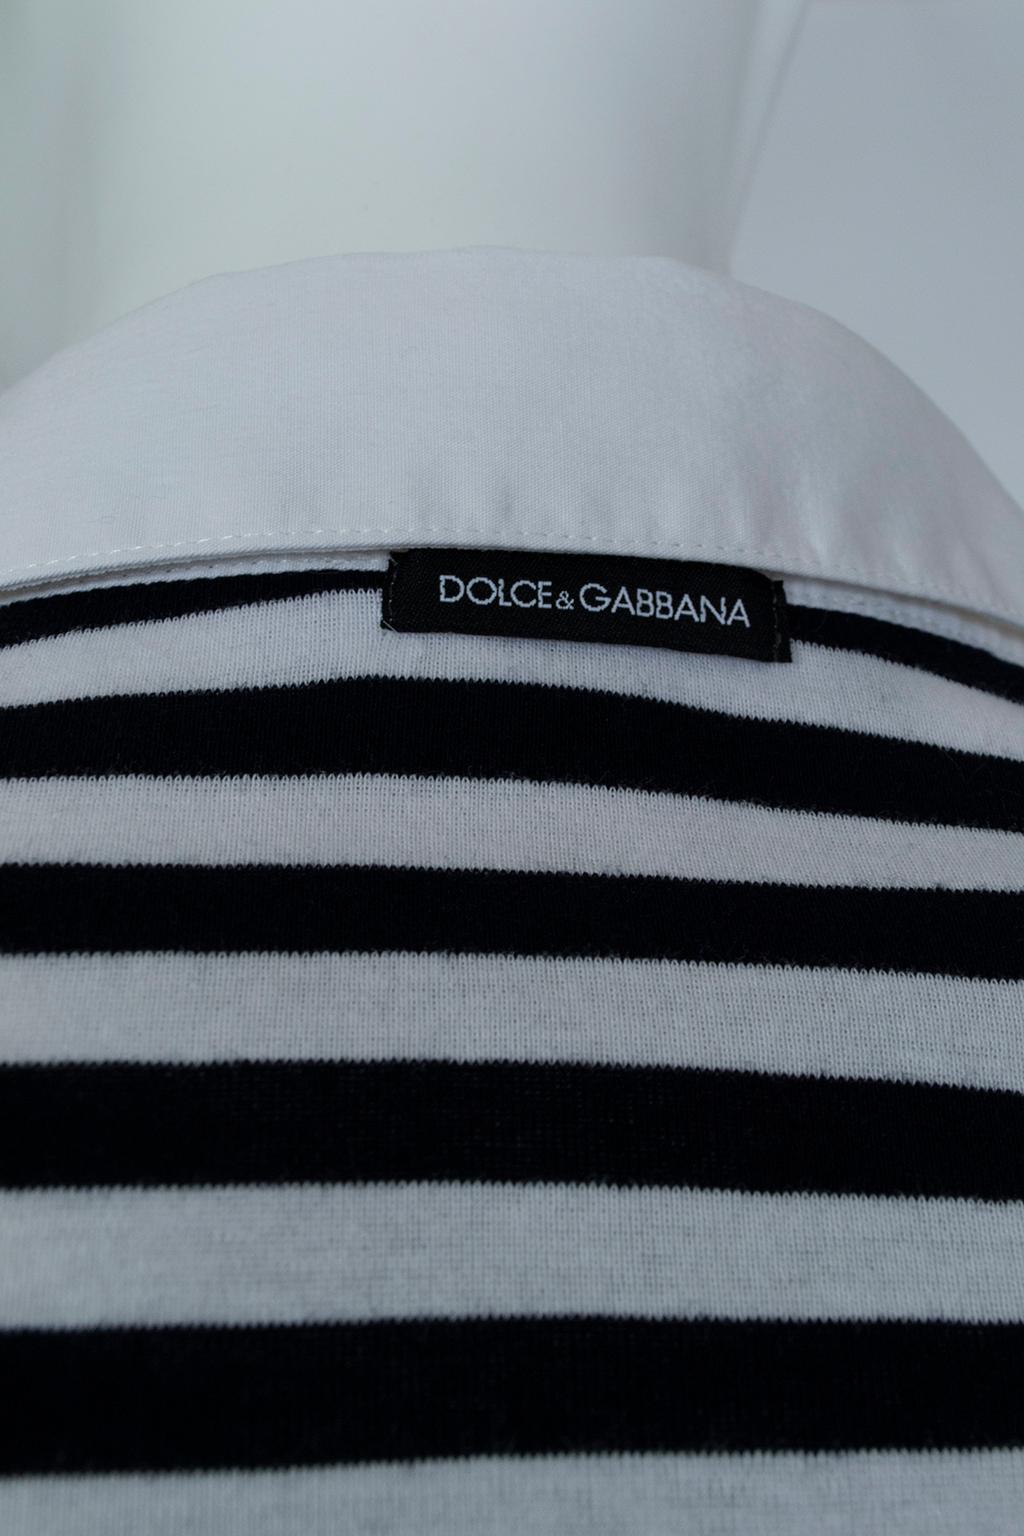 Dolce & Gabbana Black & White Gondolier Stripe Polo Shirt - IT 44, 21st Century 1